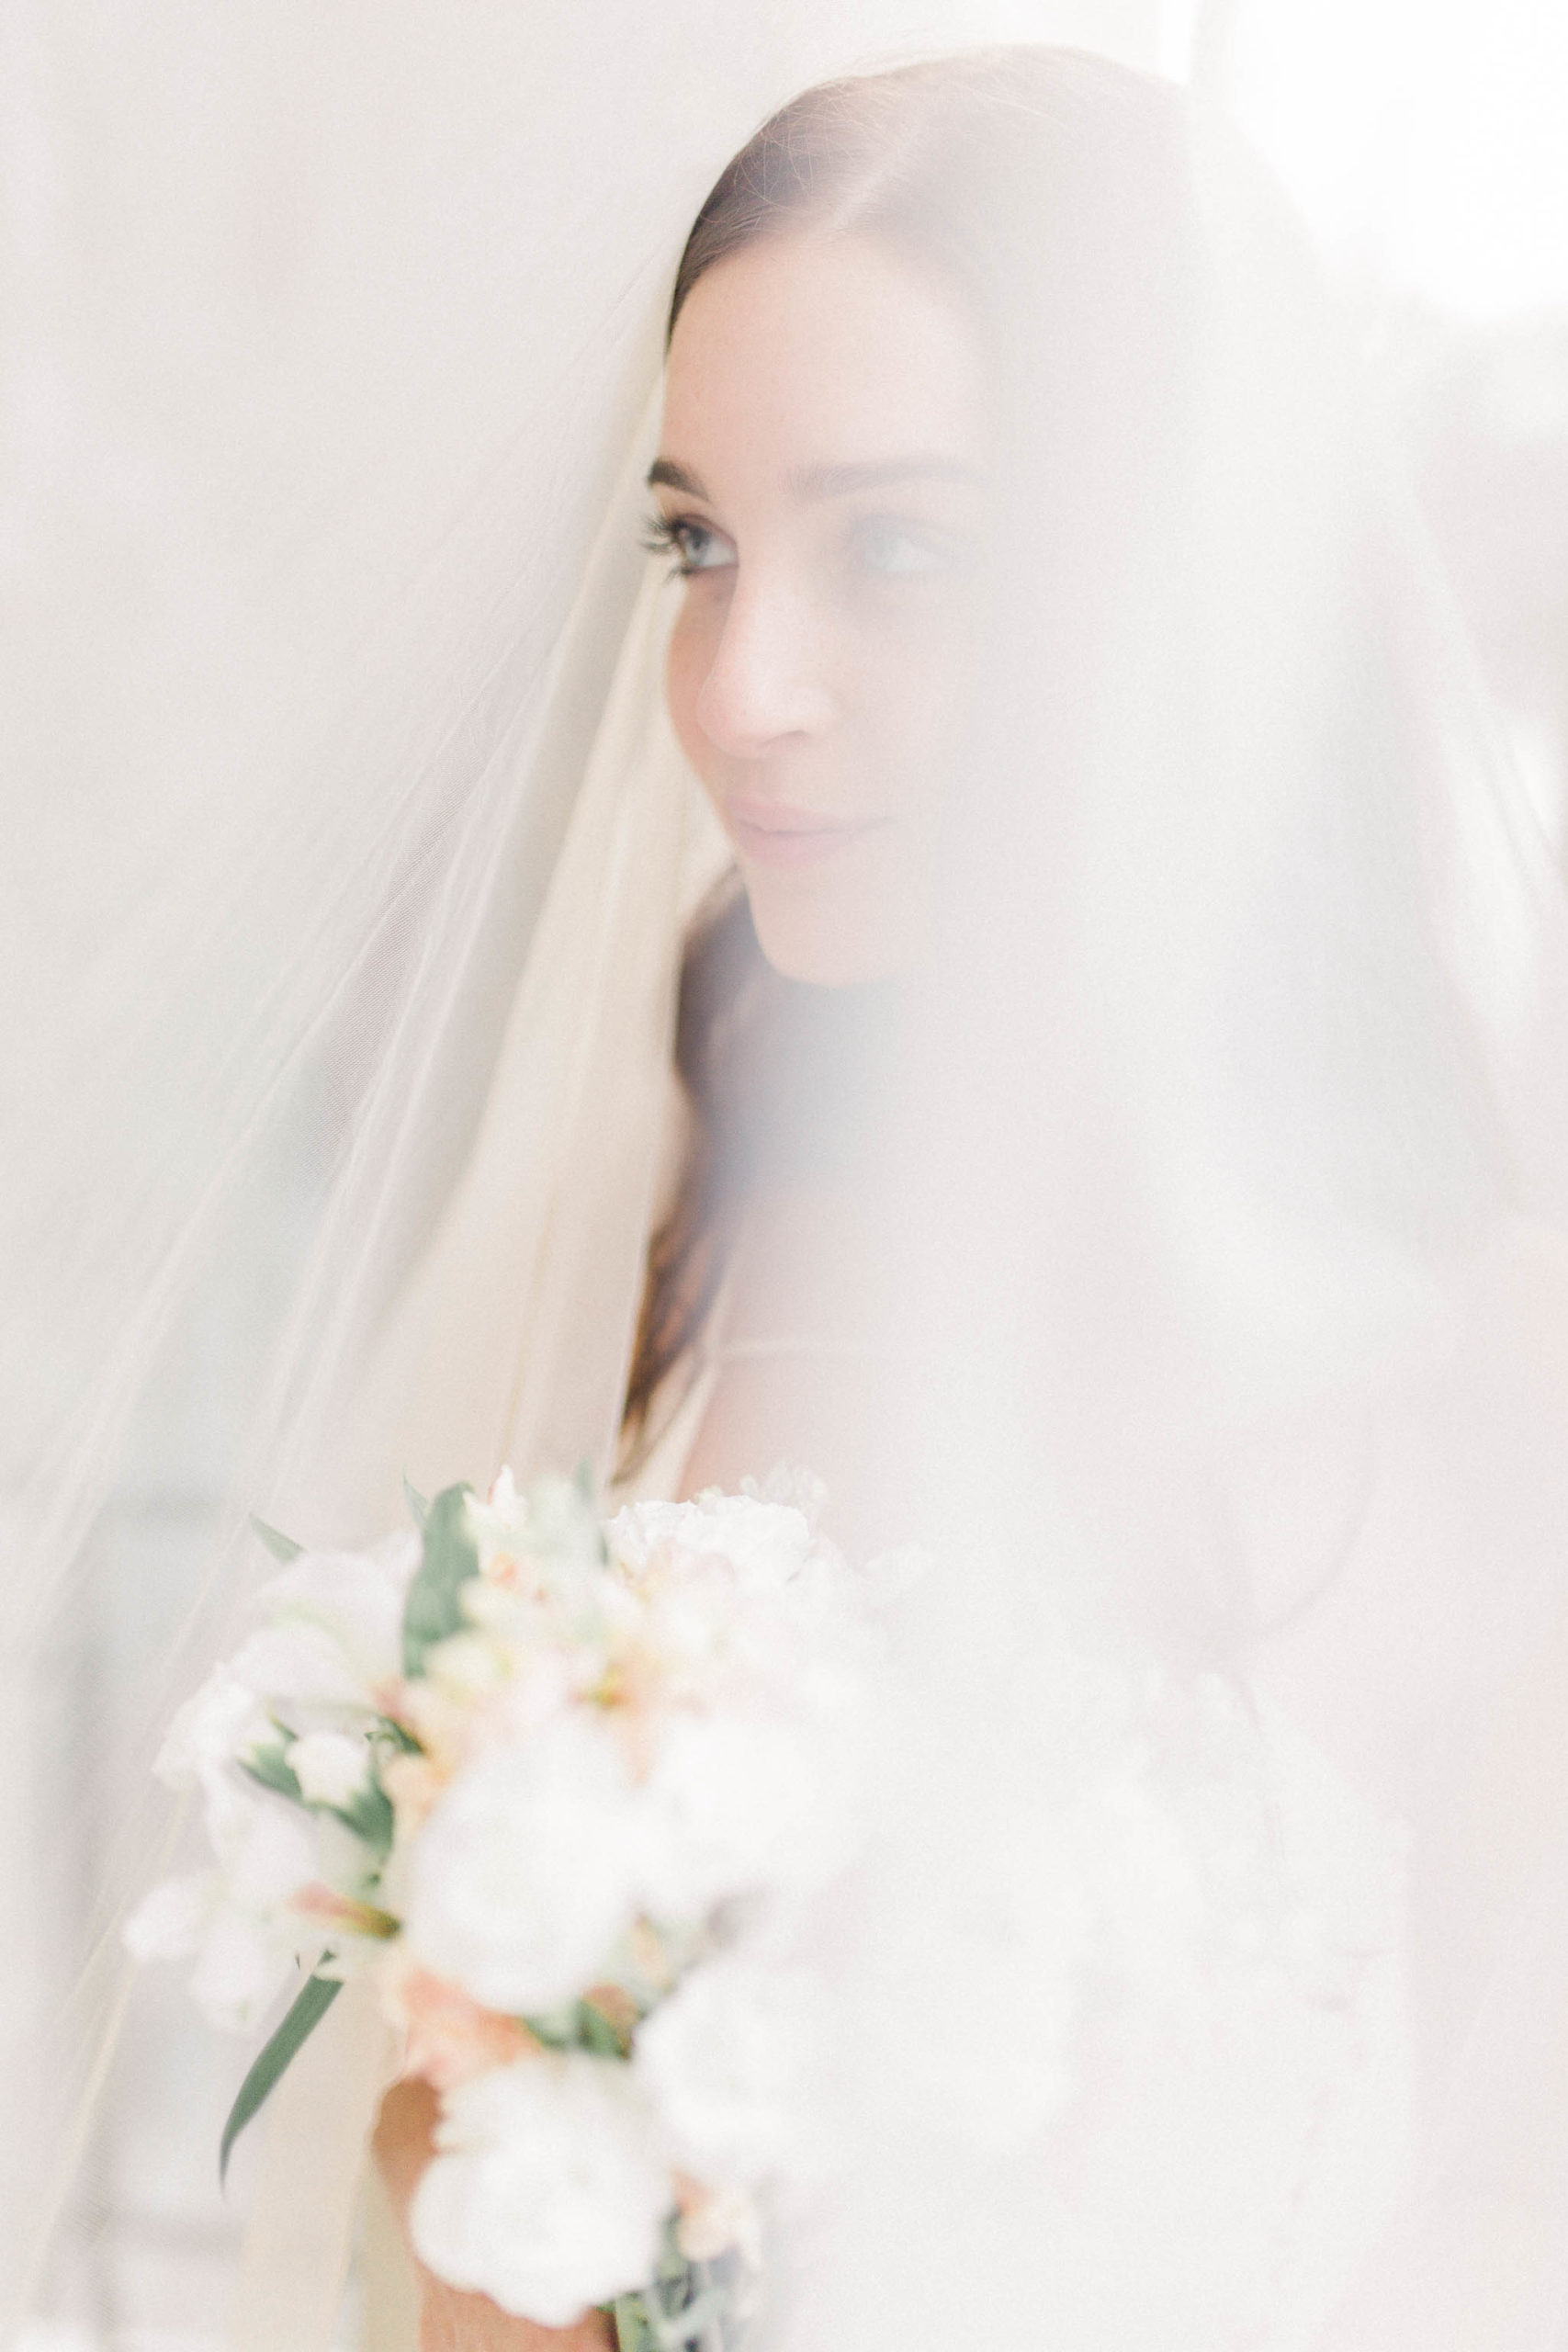 syracuse new york bridal portraits, syracuse wedding photographer